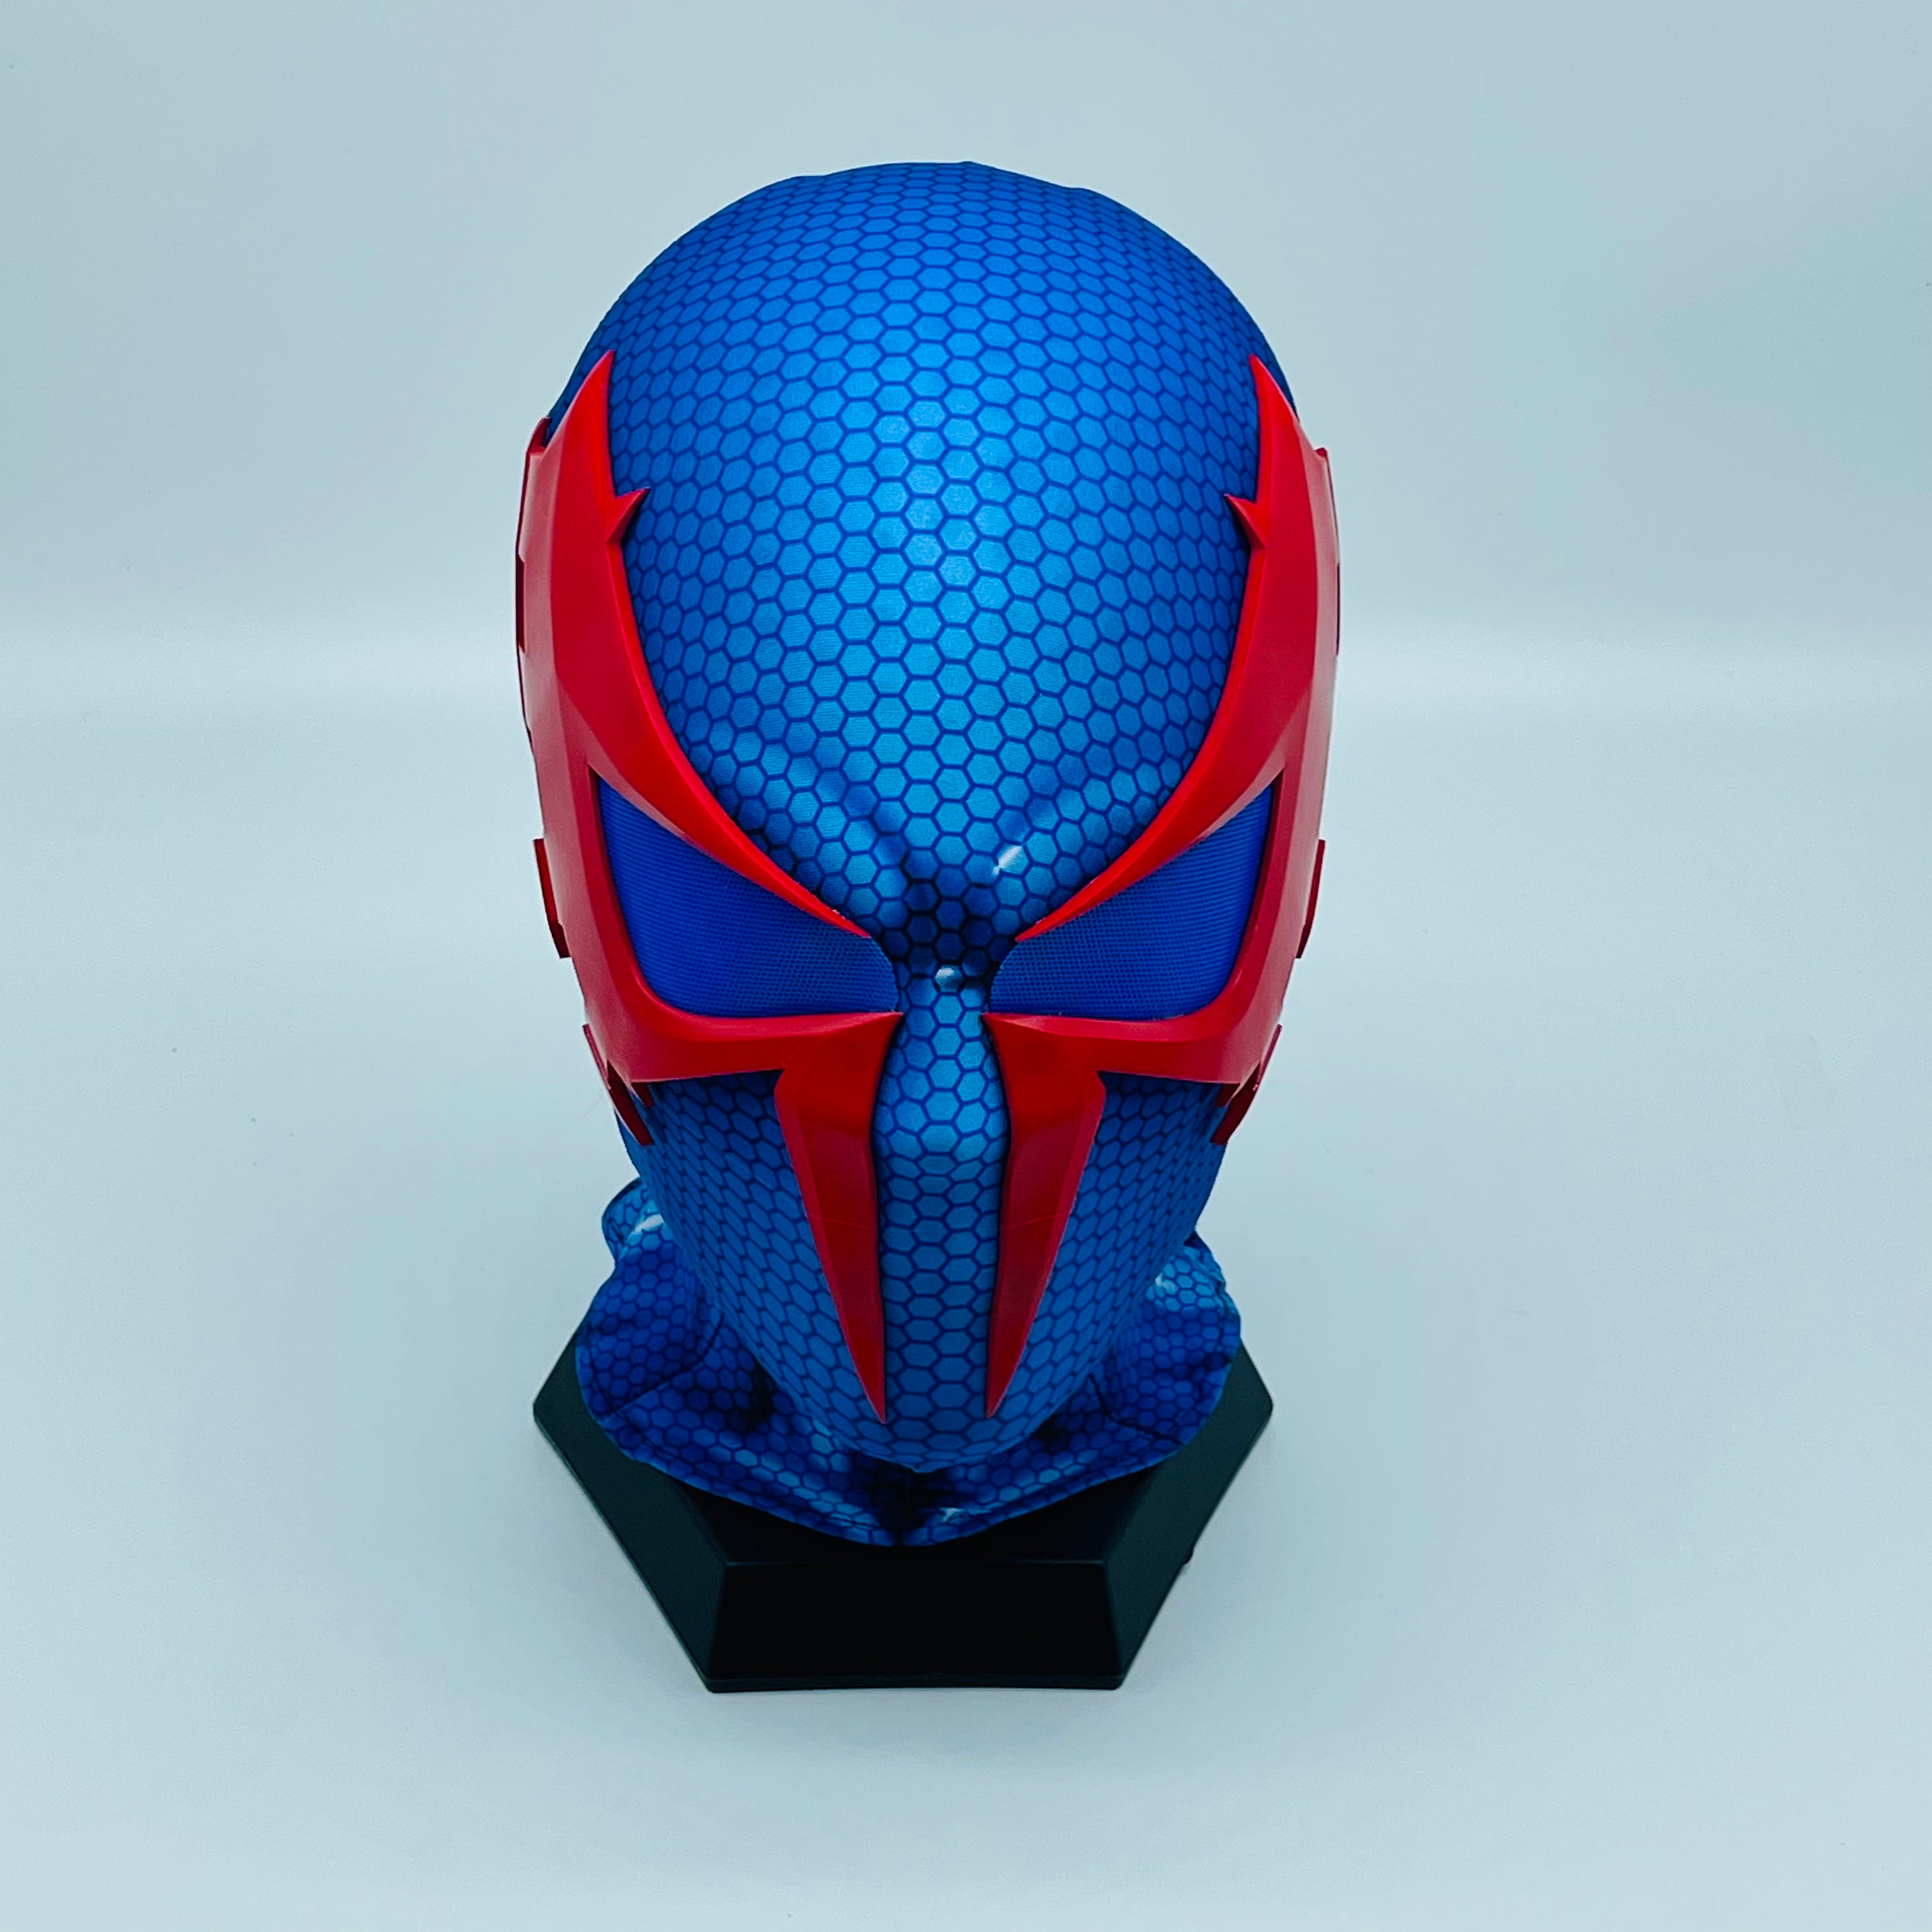 Marvel Spiderman 2099 Mask with Faceshell & Lenses 1:1 3D Handmade Blue  Spider-Man Masks Halloween Cosplay Masks for Xmas Gift